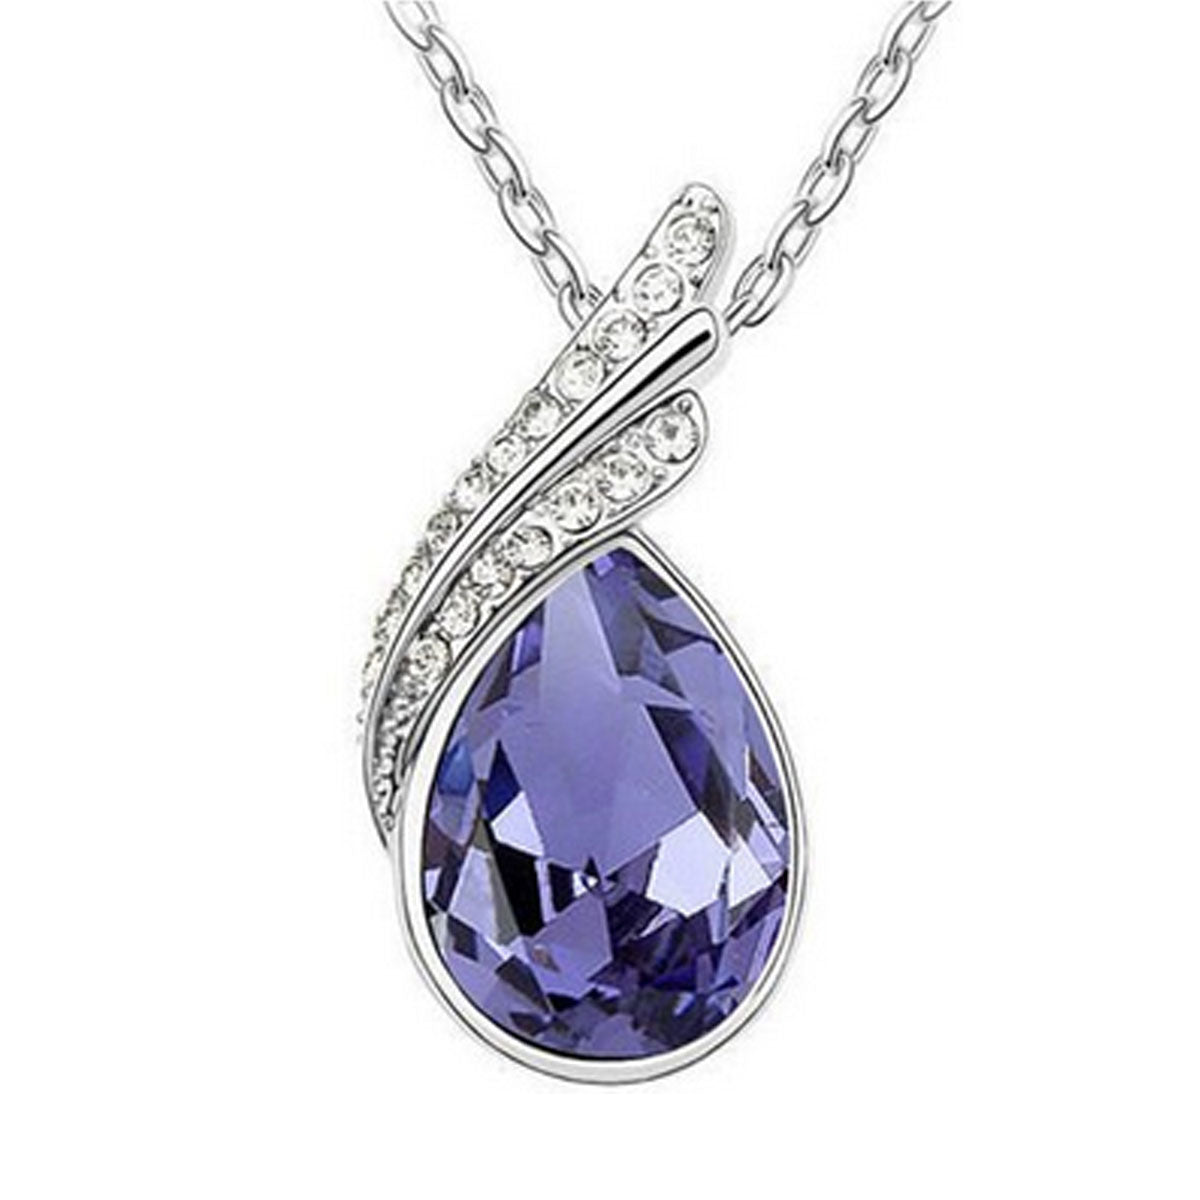 Wrapables Elegant Teardrop Crystal Pendant Necklace